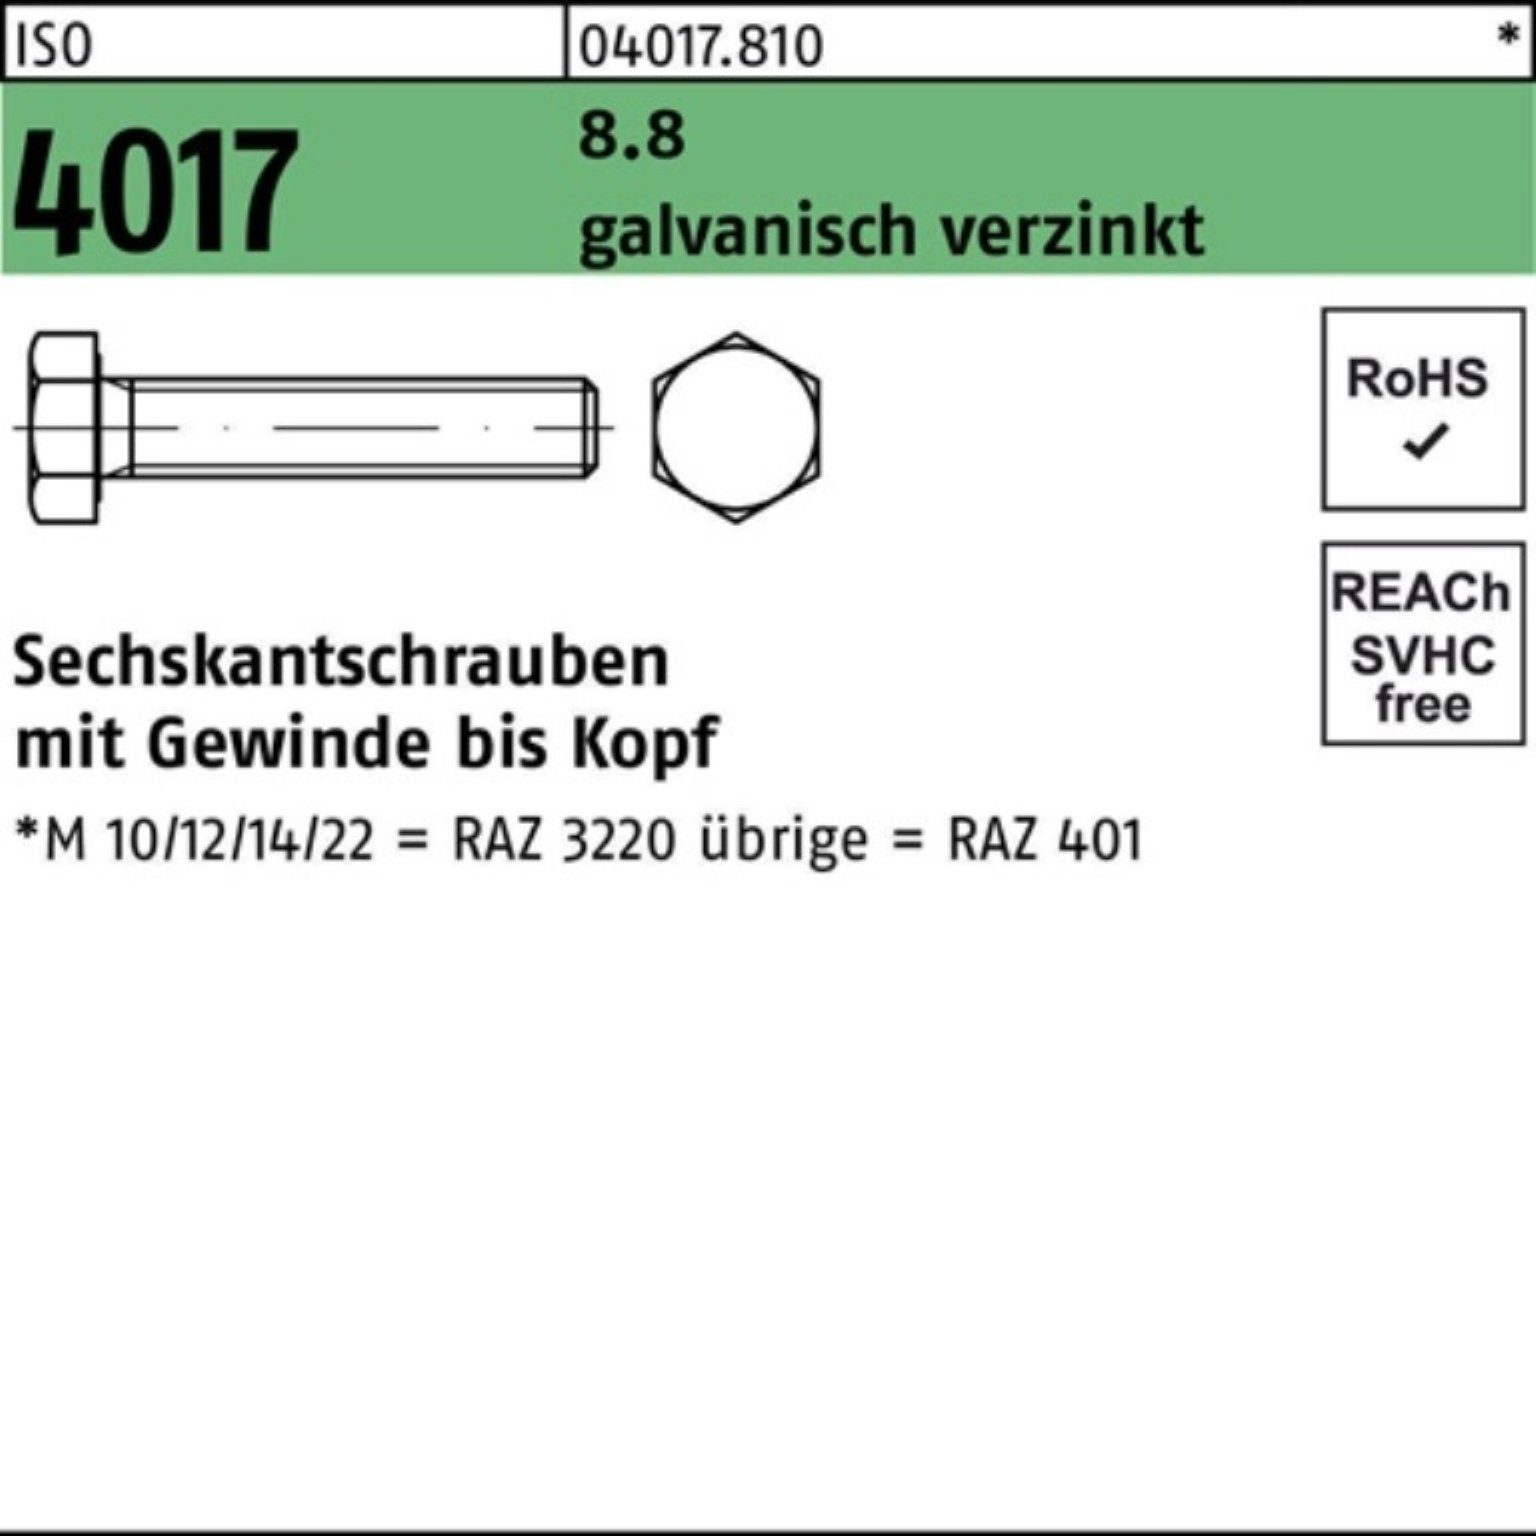 Bufab Sechskantschraube 100er VG Pack M36x 4017 ISO 120 Sechskantschraube galv.verz. 1 St 8.8